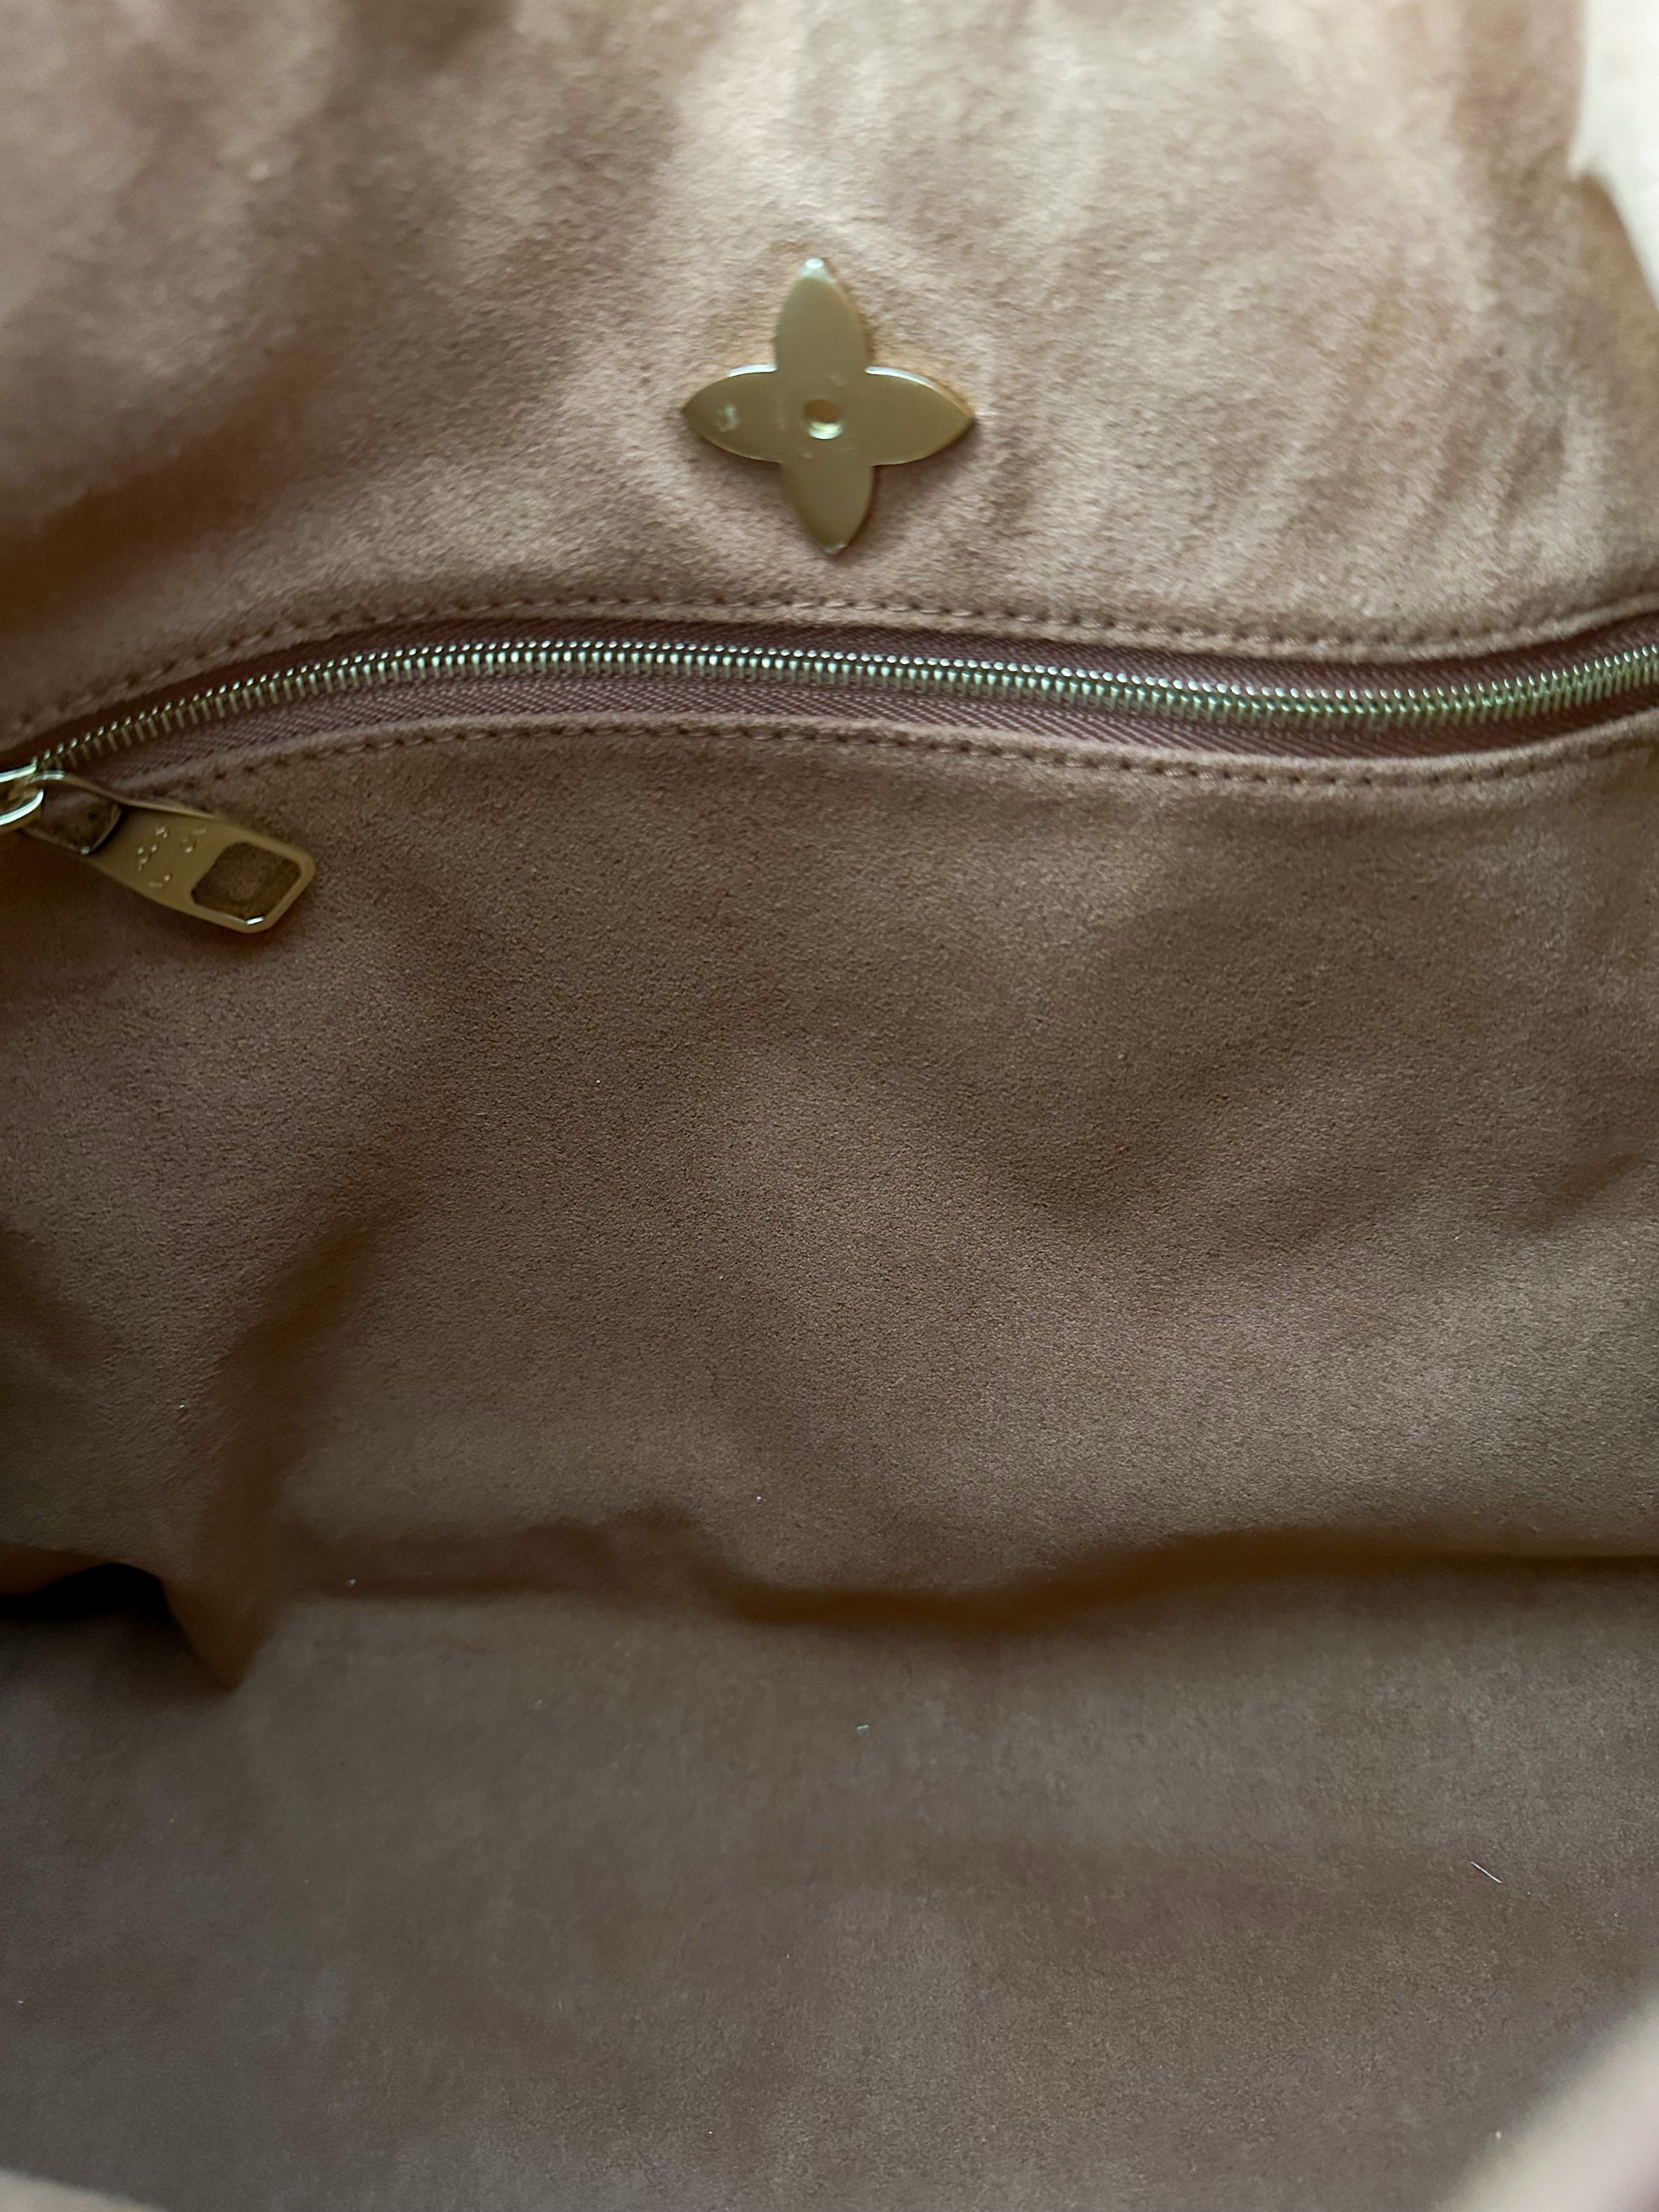 Louis Vuitton Flower Hobo Shopping Bag